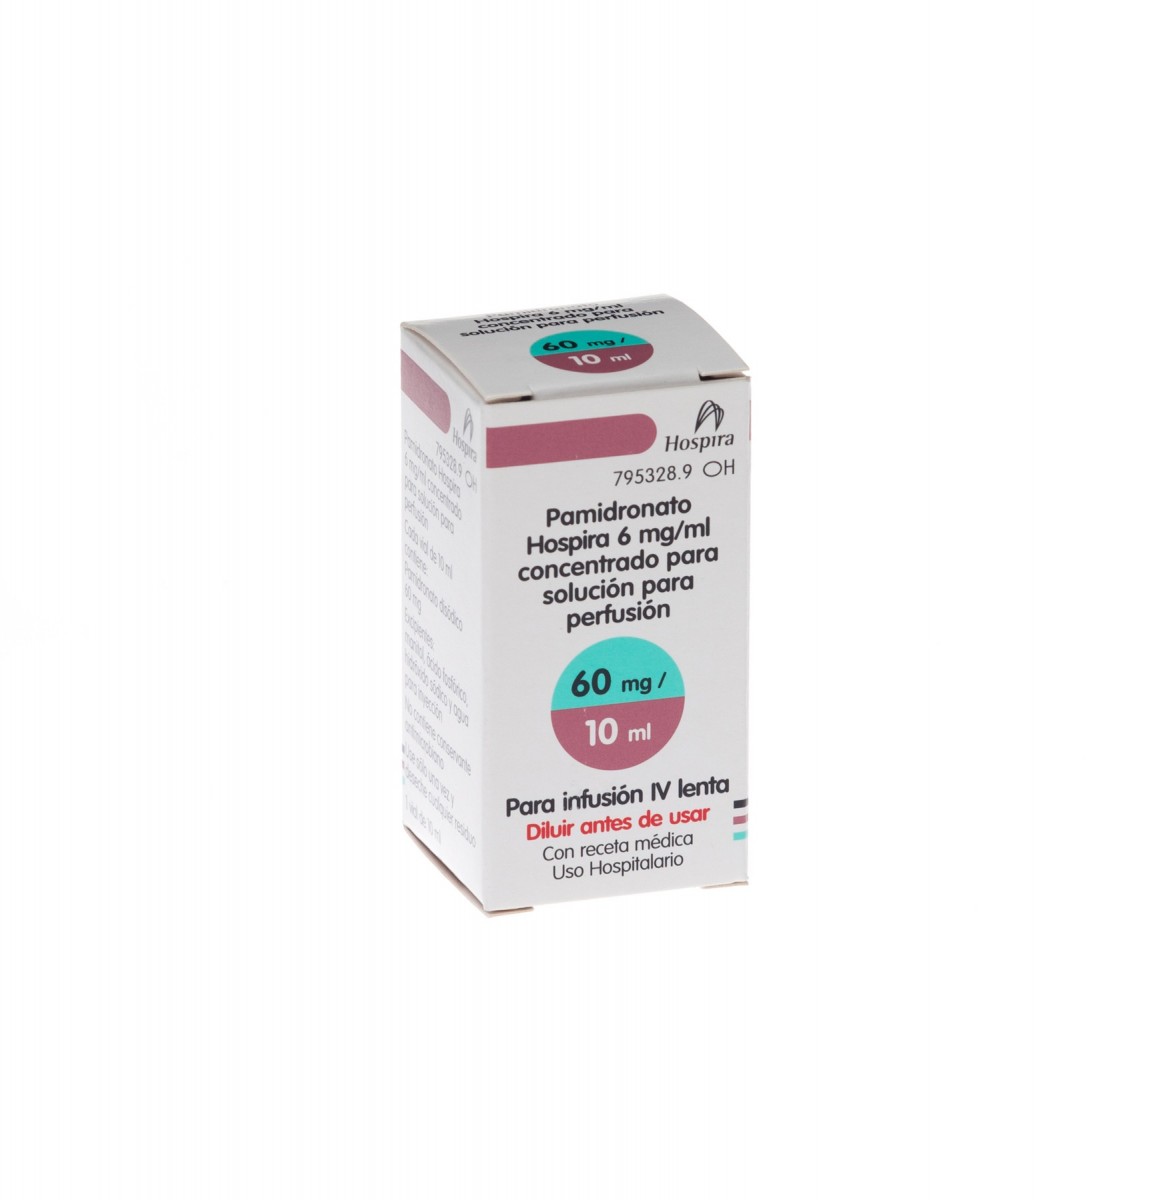 PAMIDRONATO HOSPIRA 6 mg/ml CONCENTRADO PARA SOLUCION PARA PERFUSION , 1 vial de 10 ml fotografía del envase.